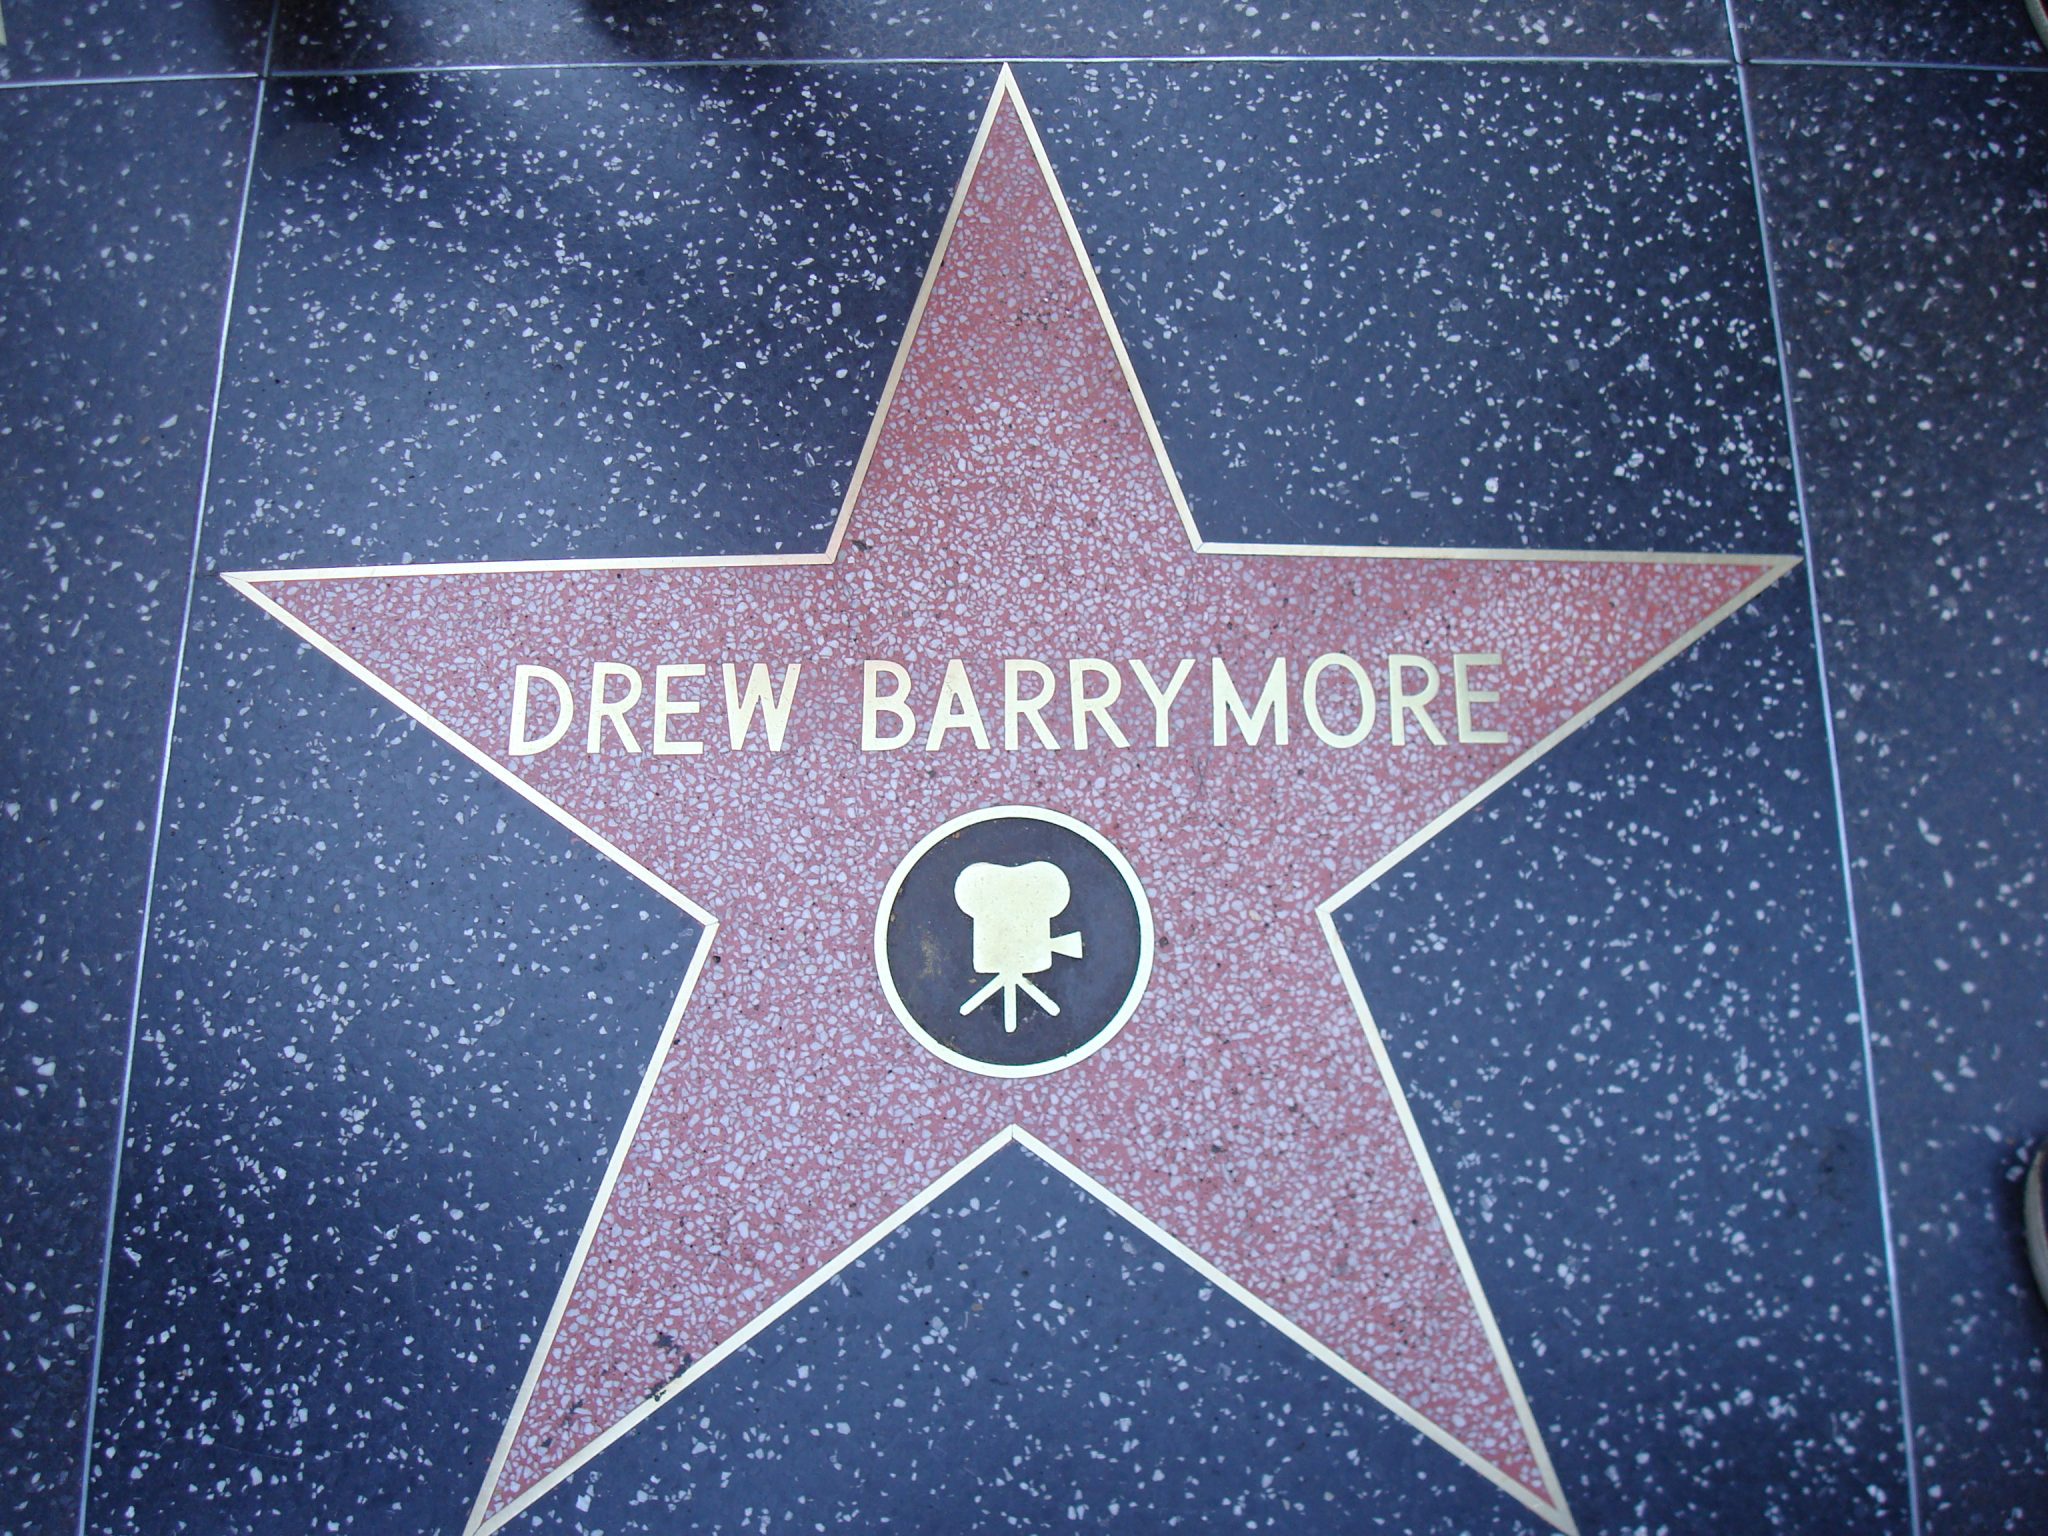 Drew Barrymore, Walk of Fame star on Hollywood Blvd.